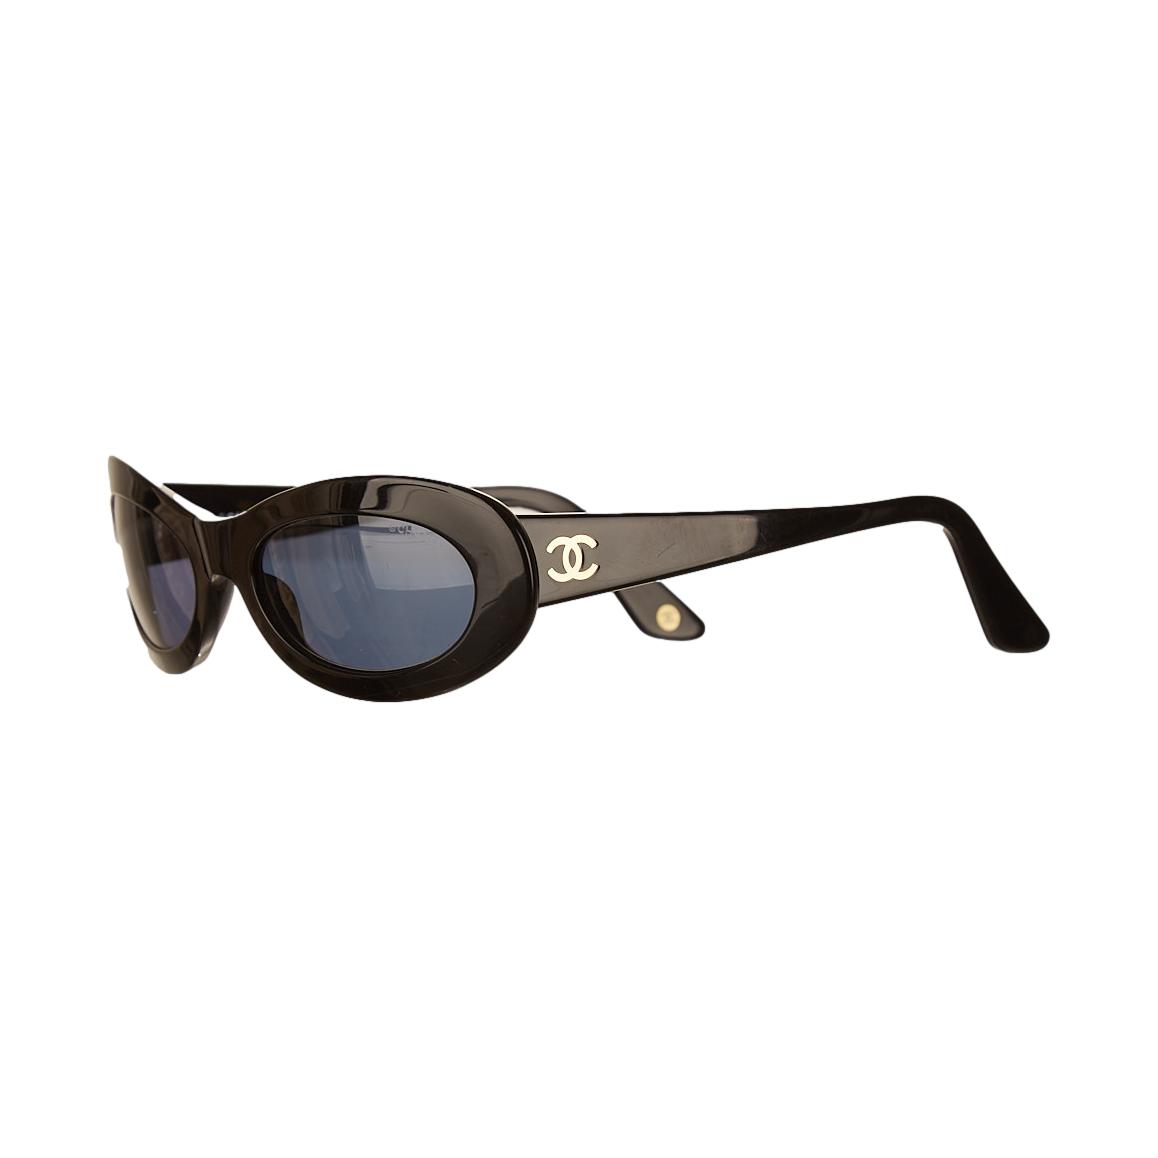 Chanel Black Gradient 5312 Oval Sunglasses Chanel